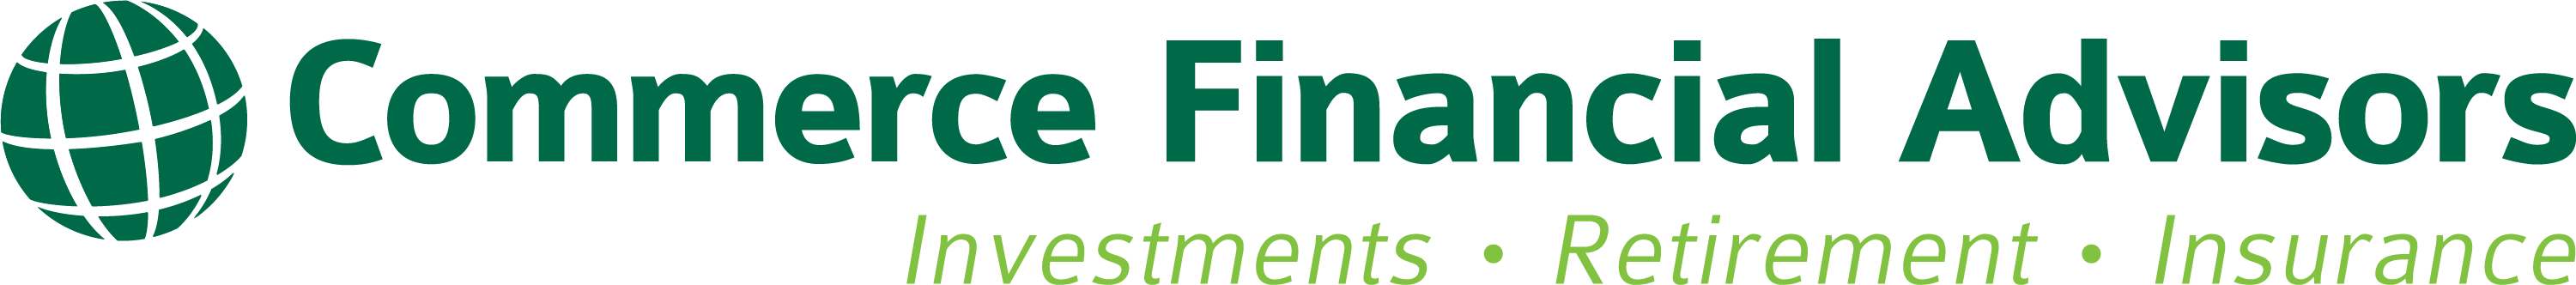 Commerce Financial Advisors, Investments - Retirement - Insurance